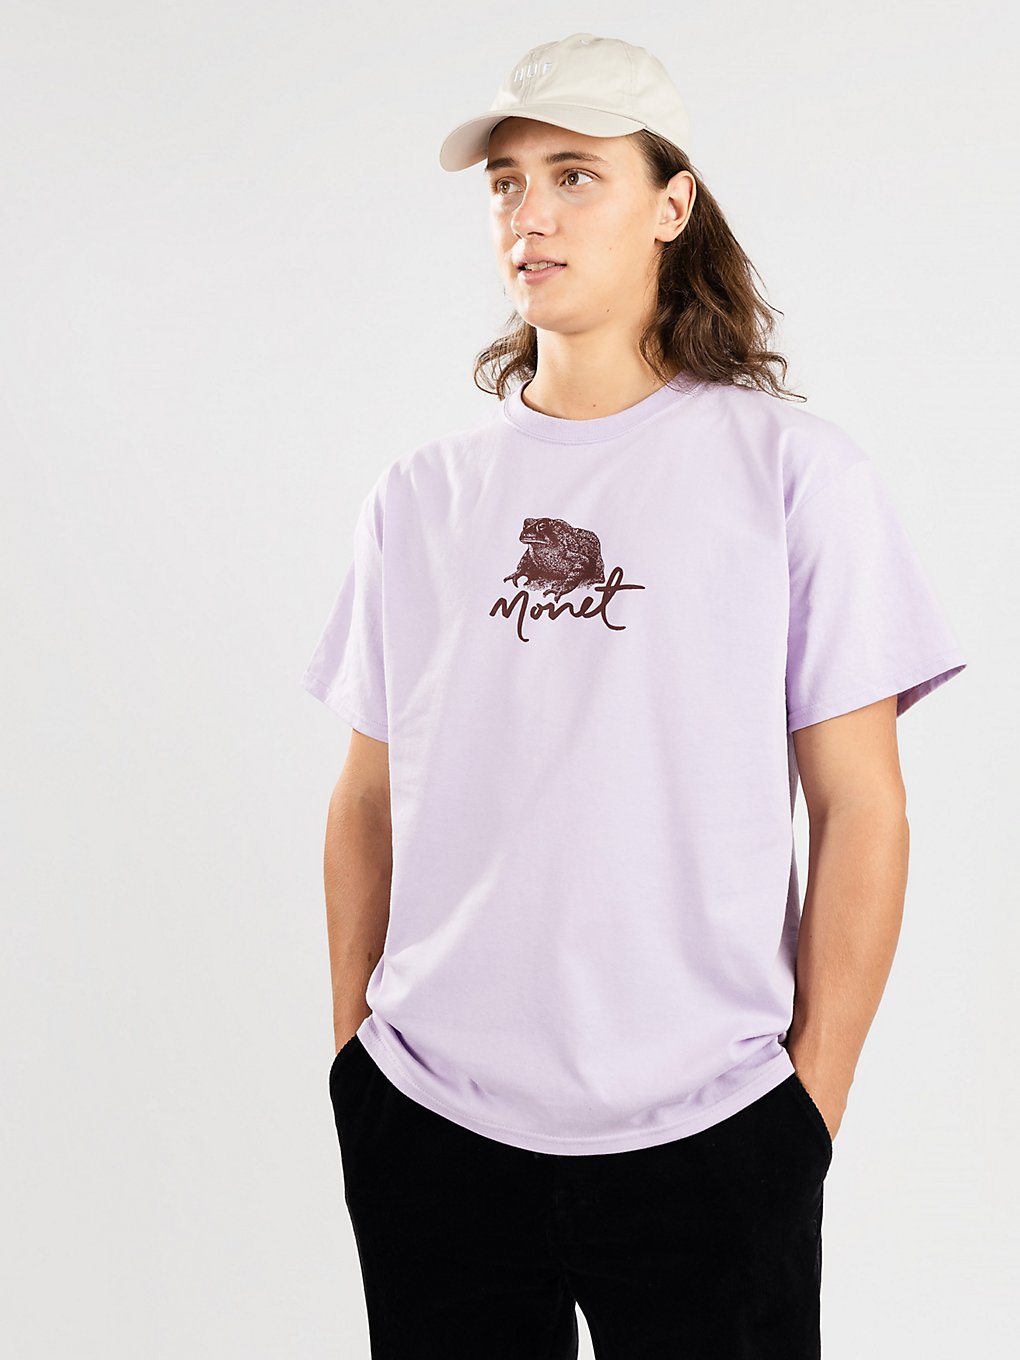 Monet Skateboards Ribbit T-Shirt lavender kaufen